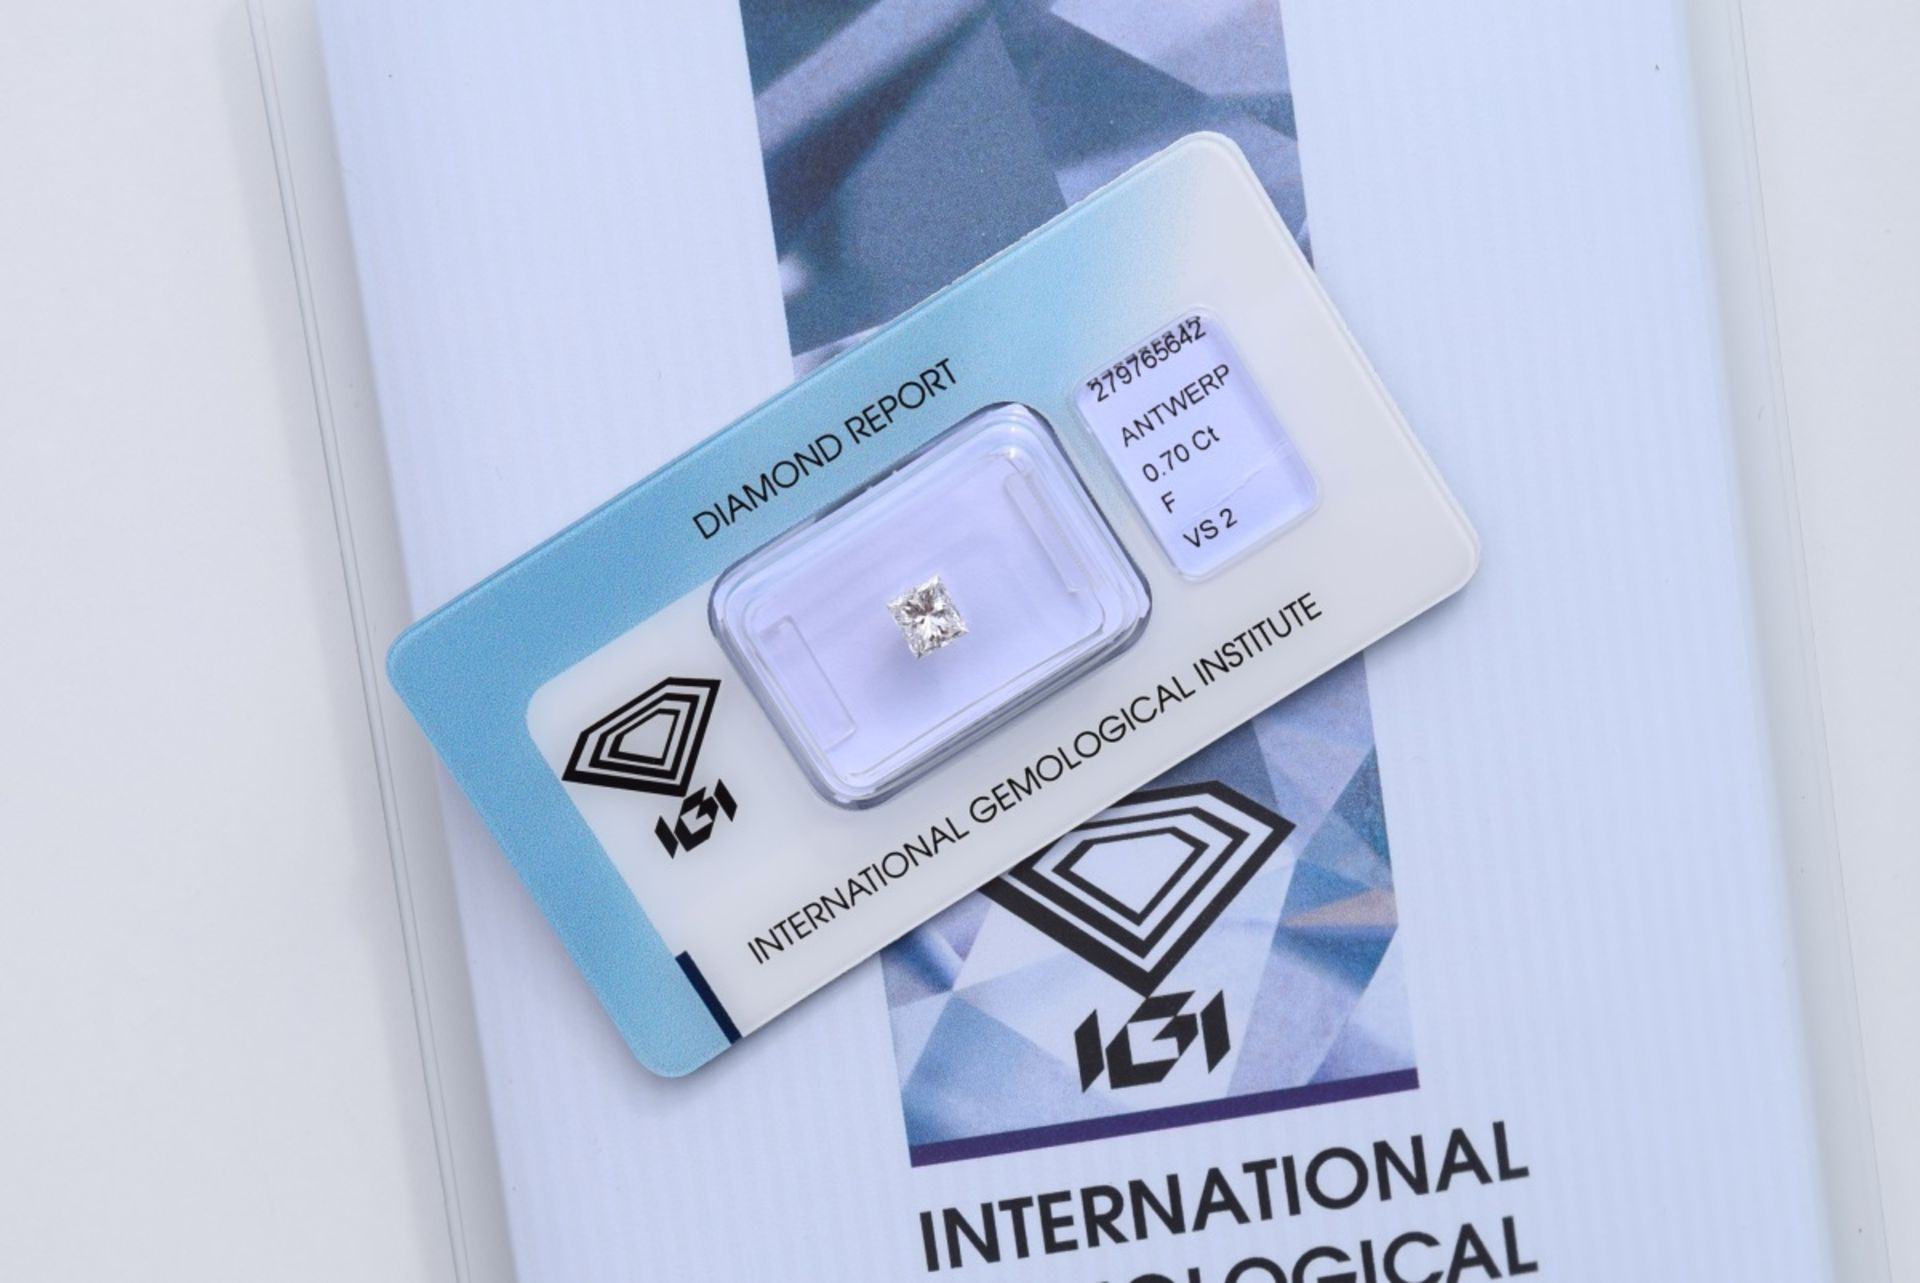 IGI 'Princess' Diamond - 0.7ct VS2 F - Sealed & Certificated (September 2017) - Image 2 of 3